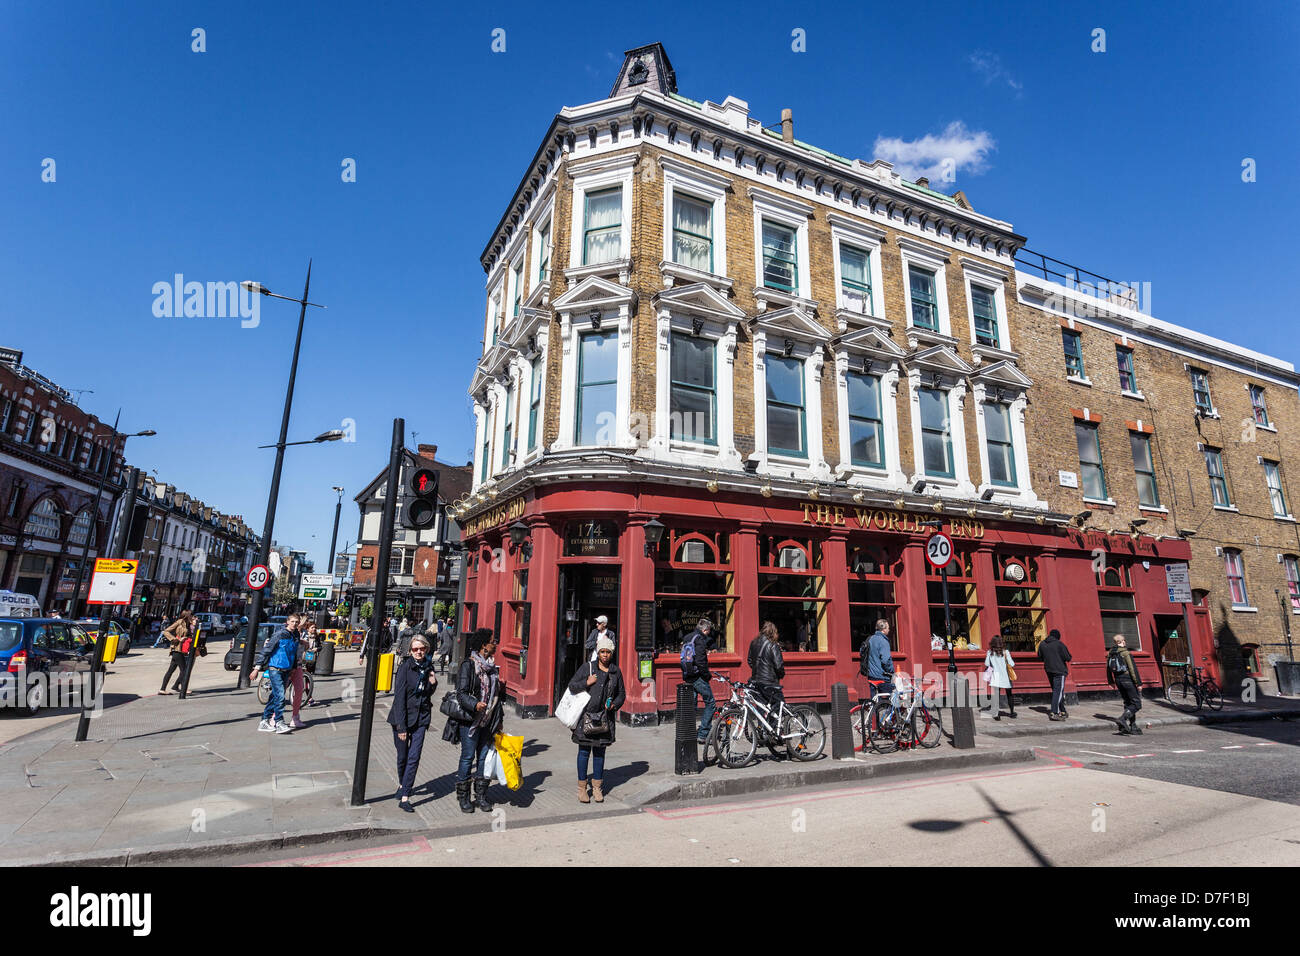 Camden Street Szene und der Welt Ende Pub, Camden, London, England, UK Stockfoto